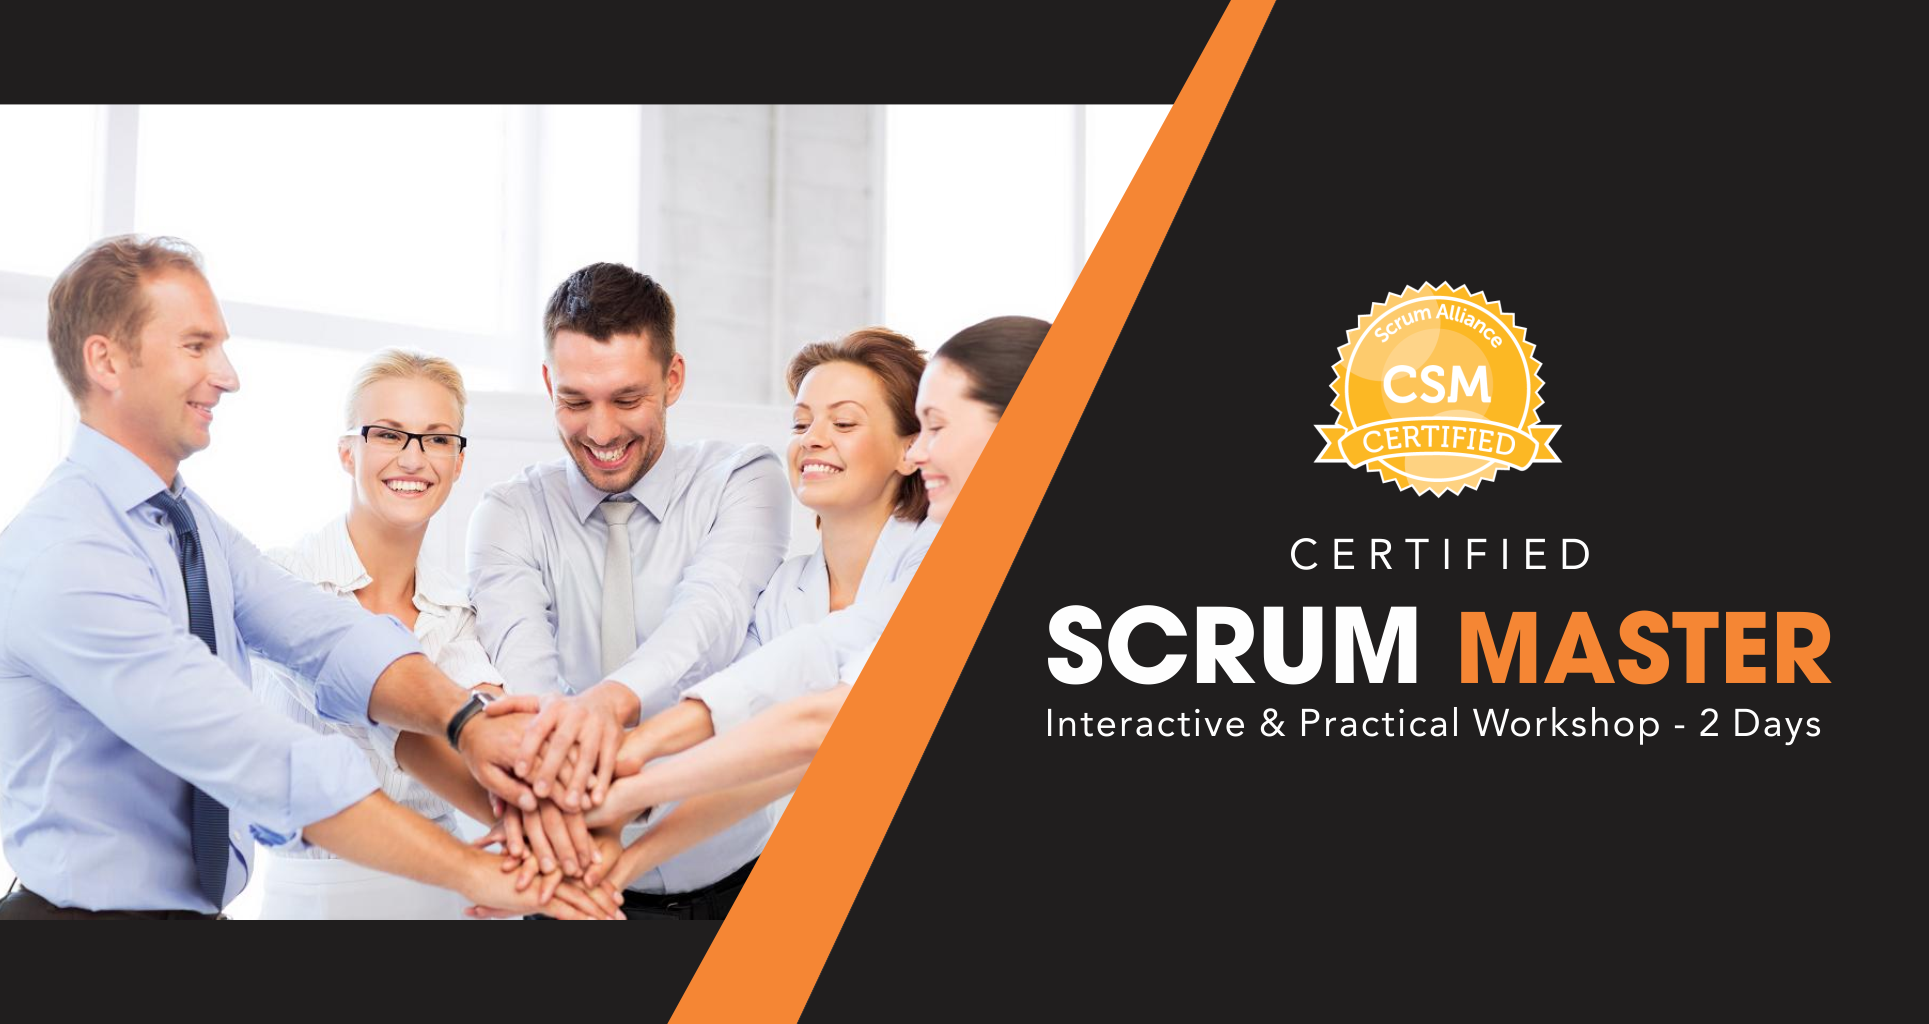 CSM (Certified Scrum Master) certification Training In St. Cloud, MN